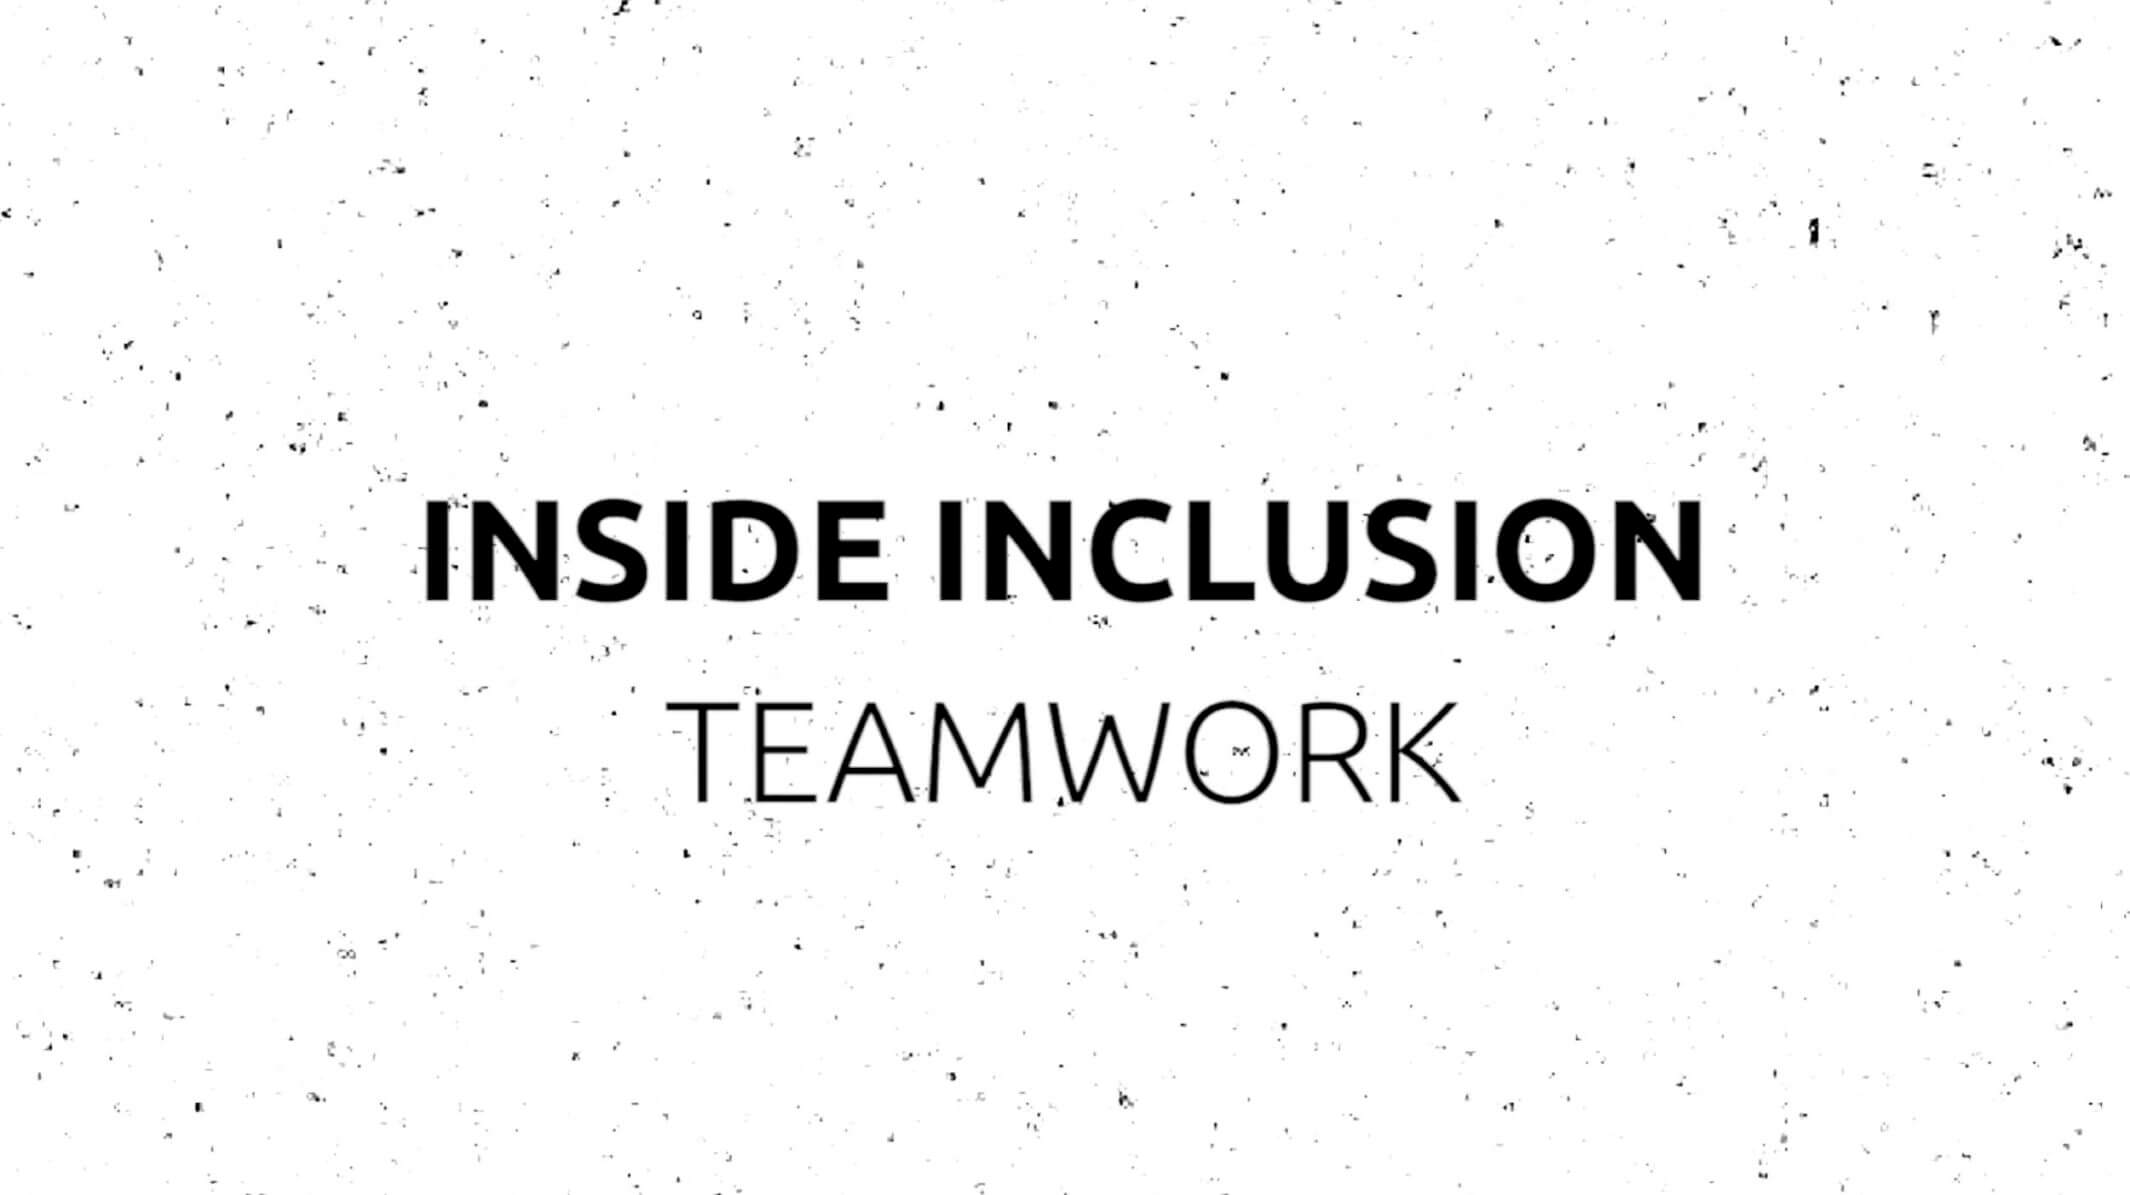 Inside Inclusion: Teamwork